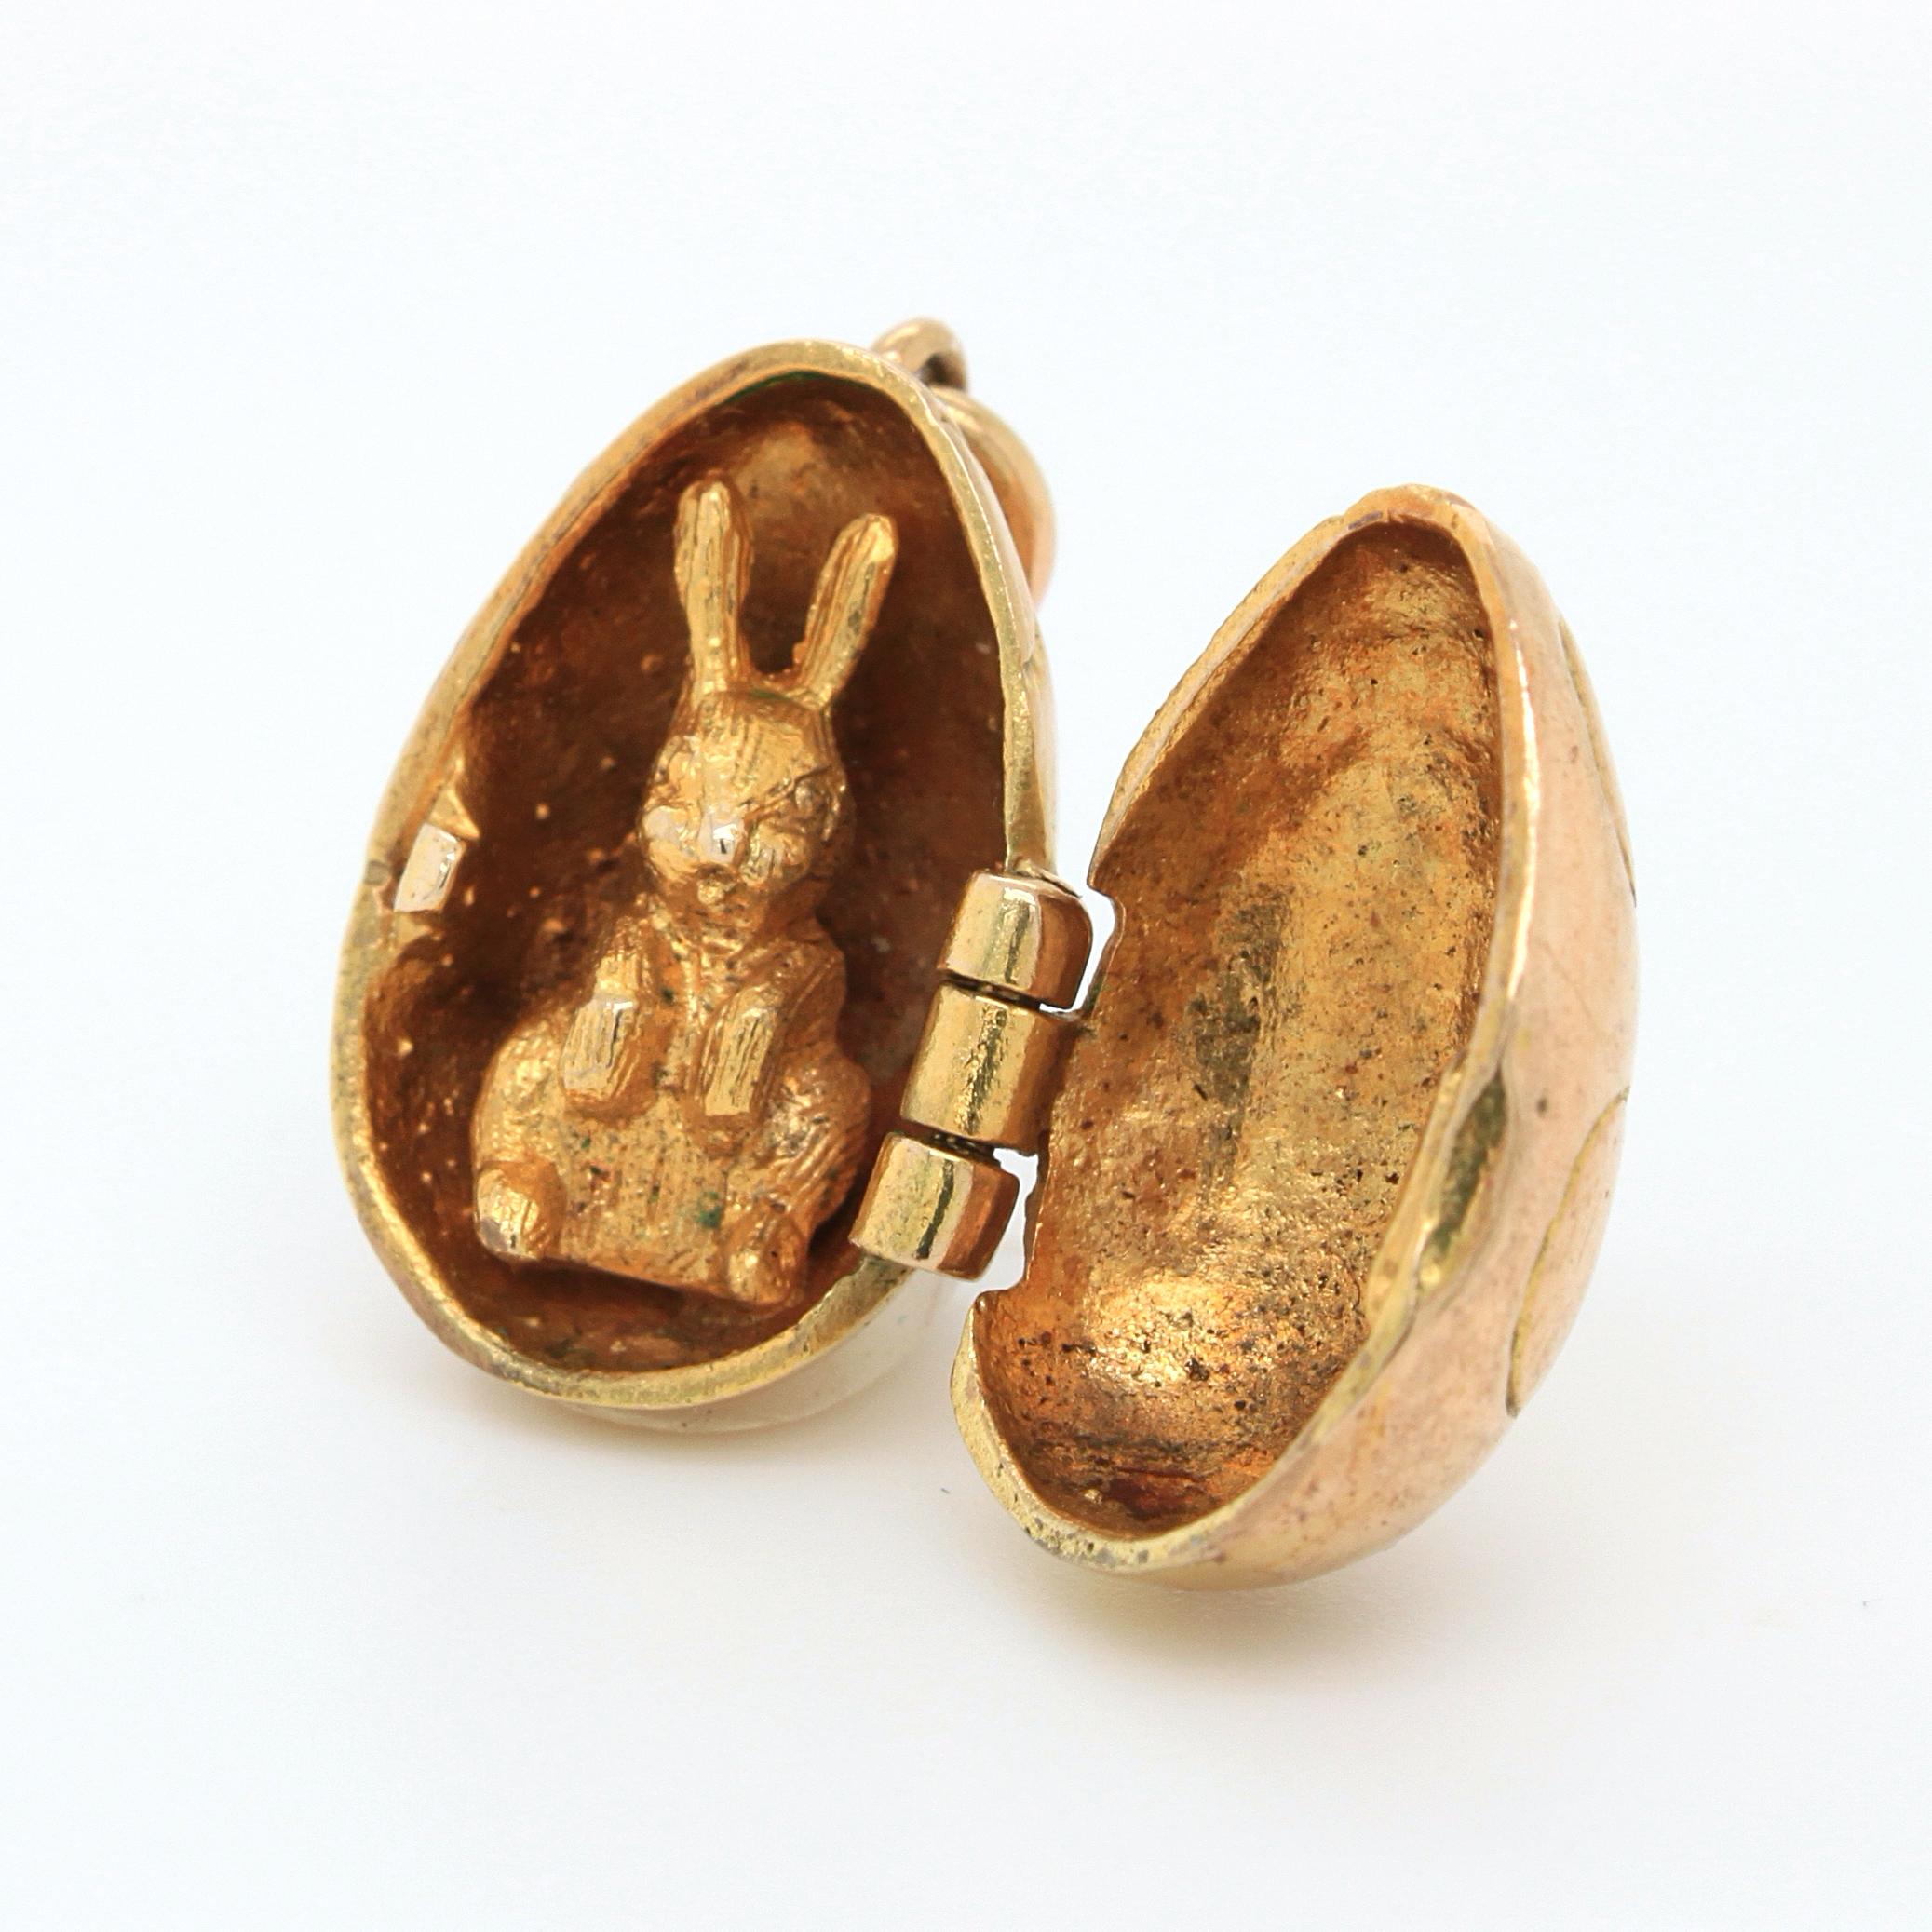 Golden Egg with Rabbit Pendant, circa 1900 1